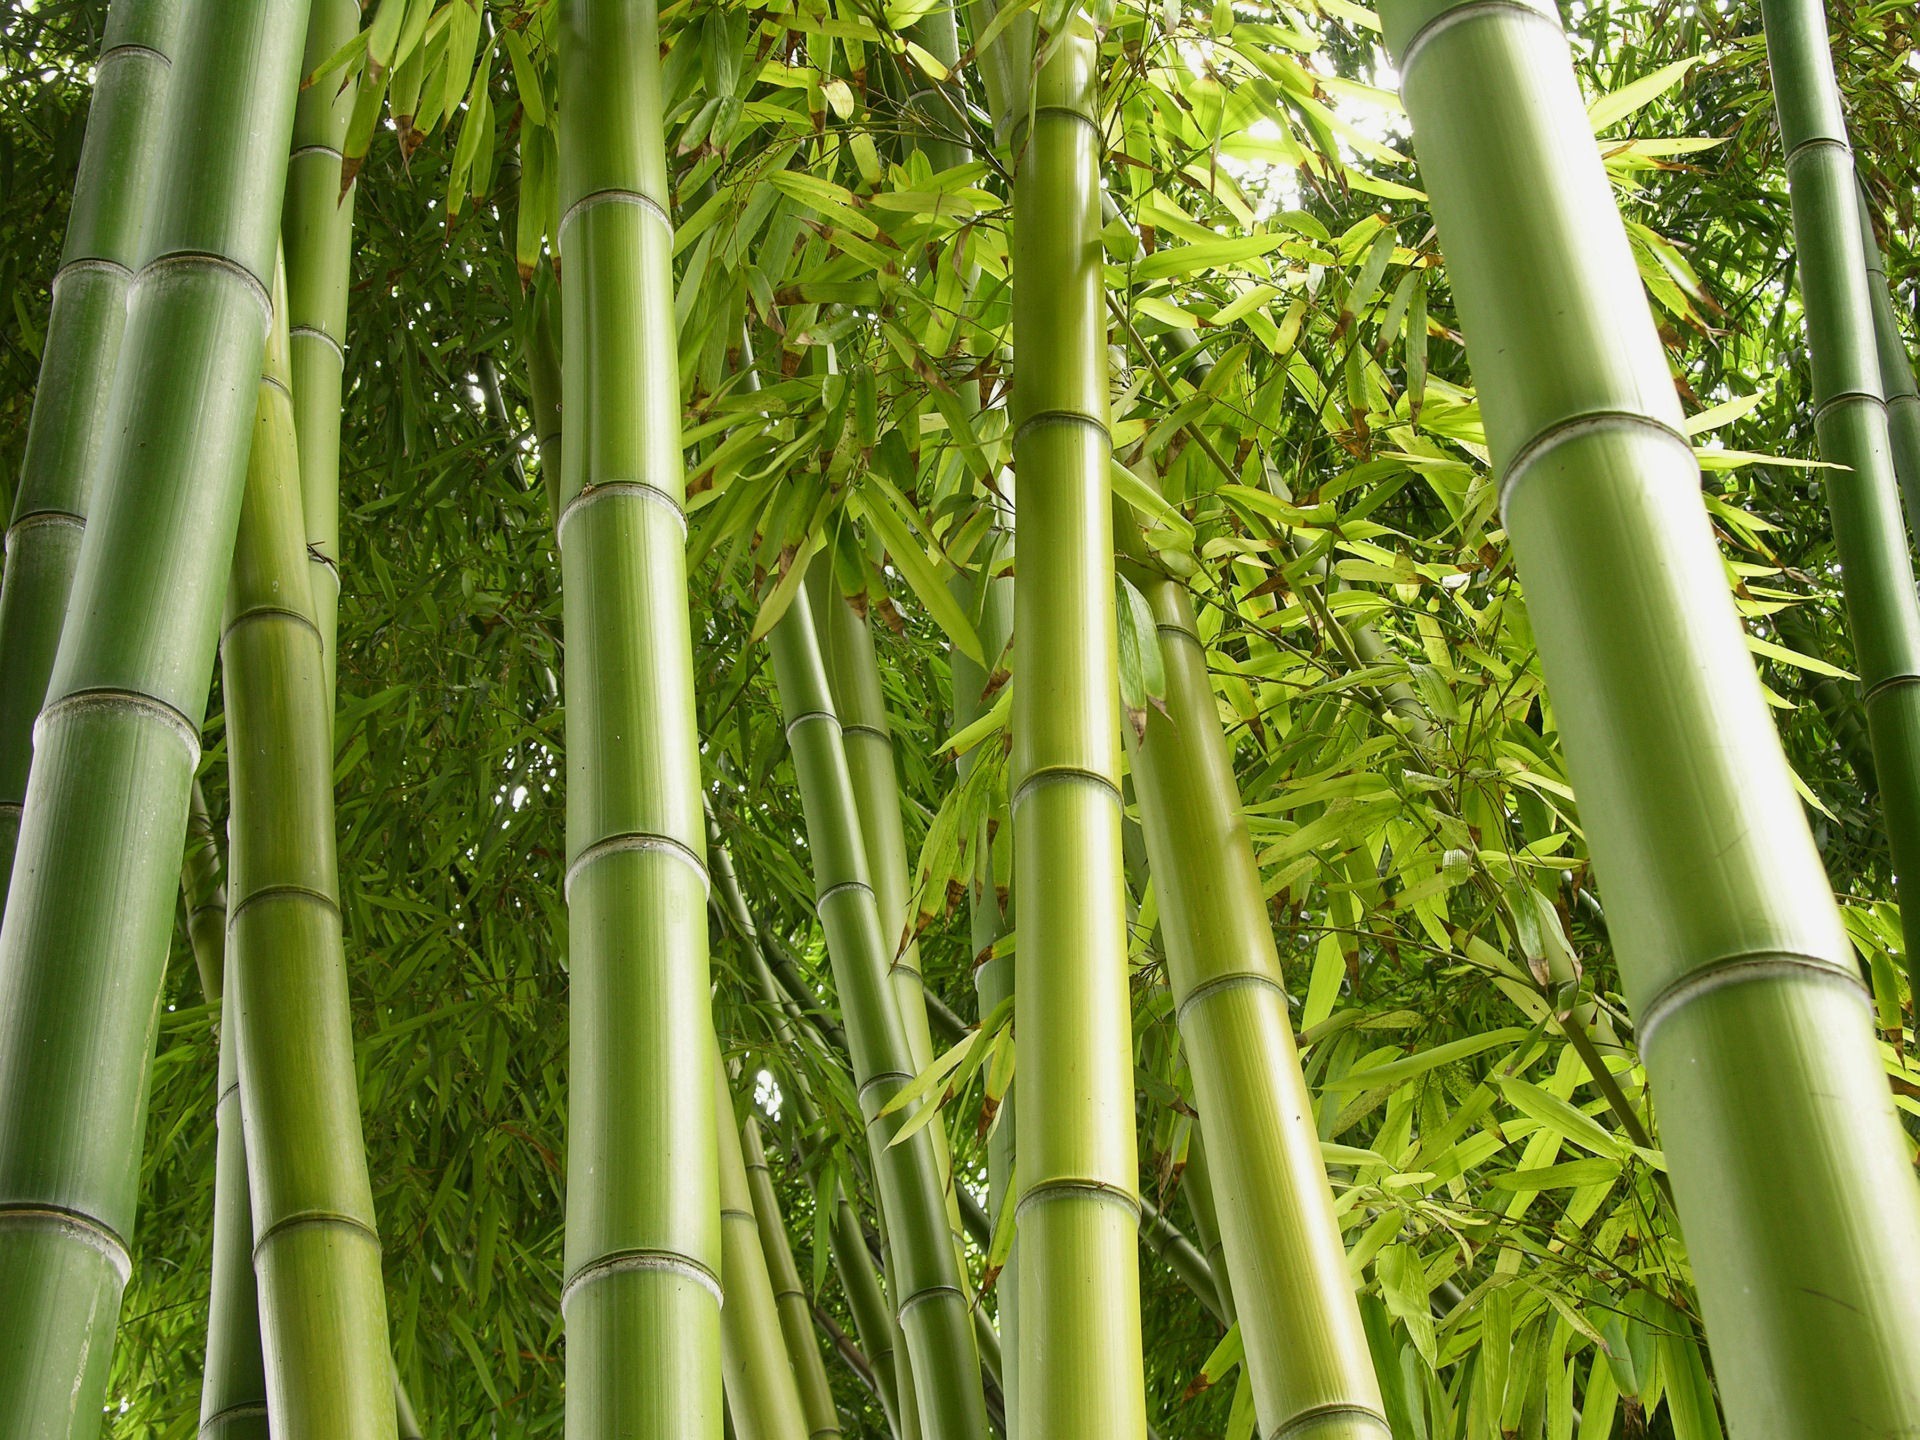 216308 descargar imagen tierra/naturaleza, bambú: fondos de pantalla y protectores de pantalla gratis